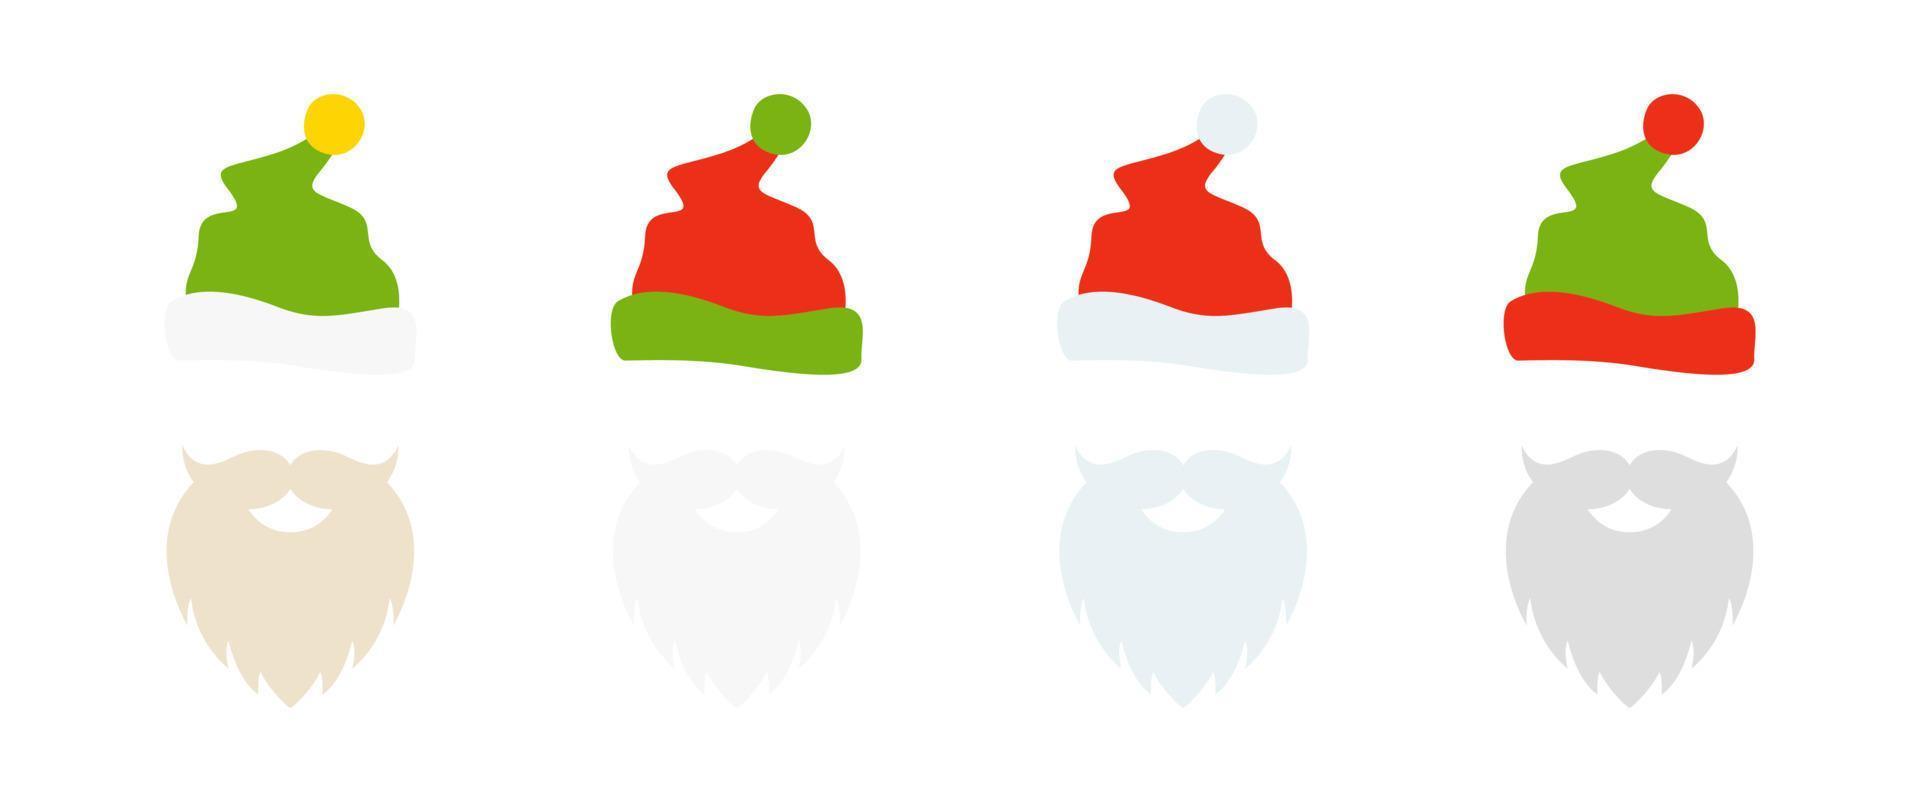 baard met Kerstmis hoed Aan wit achtergrond vector